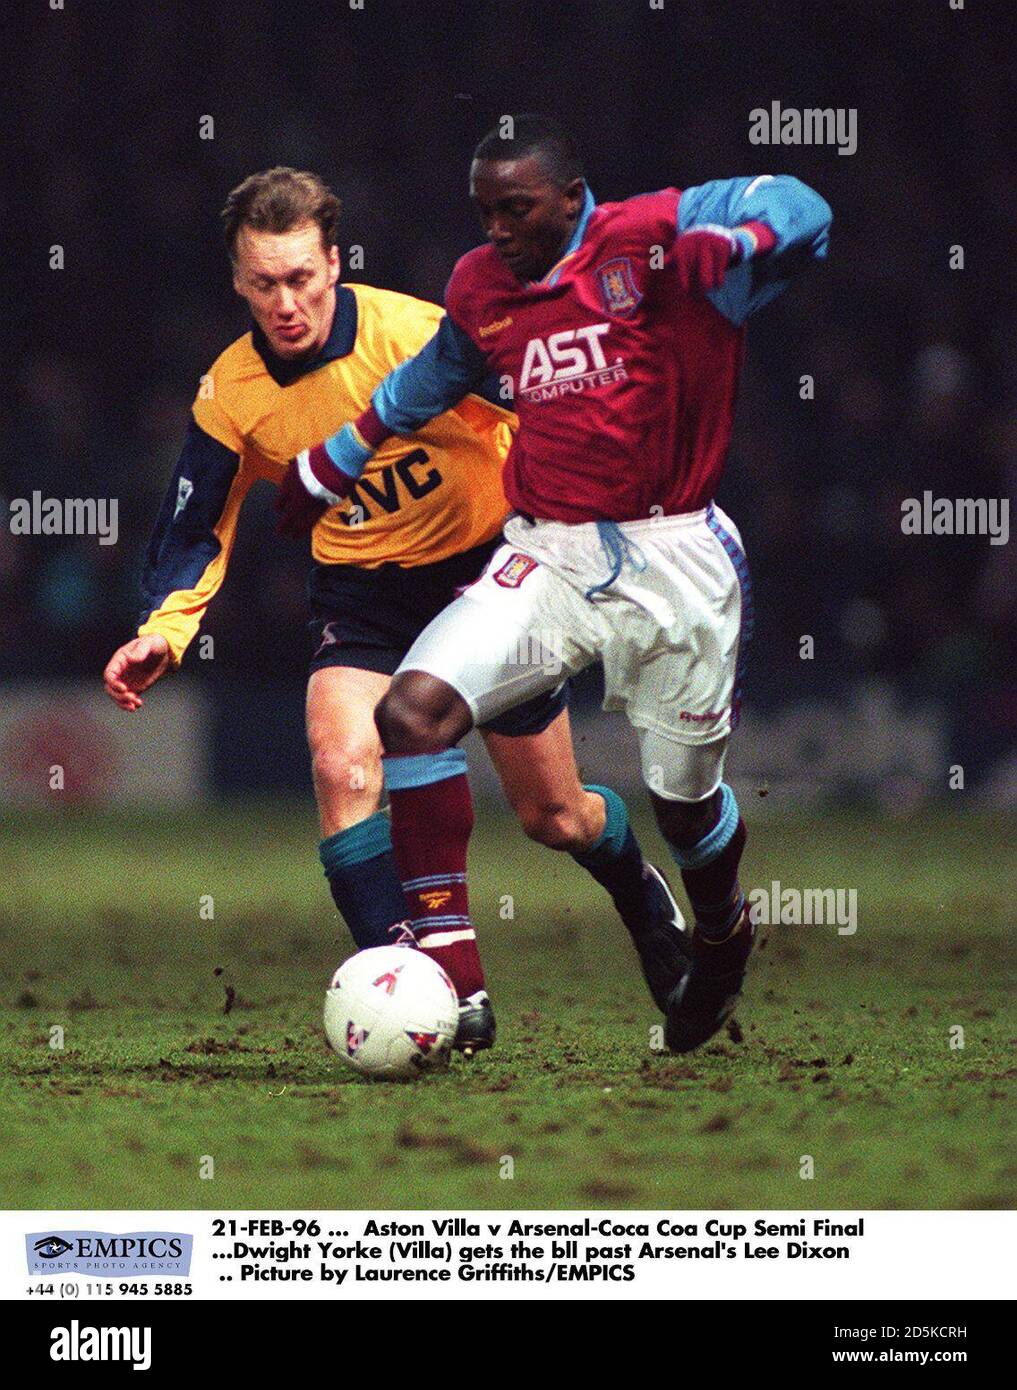 21-FEB-96... Aston Villa v Arsenal - semifinal de la Copa Coca-Cola...Dwight Yorke (Villa) pasa el balón por Lee Dixon del Arsenal. Foto de Laurence Griffiths/EMPICS Foto de stock